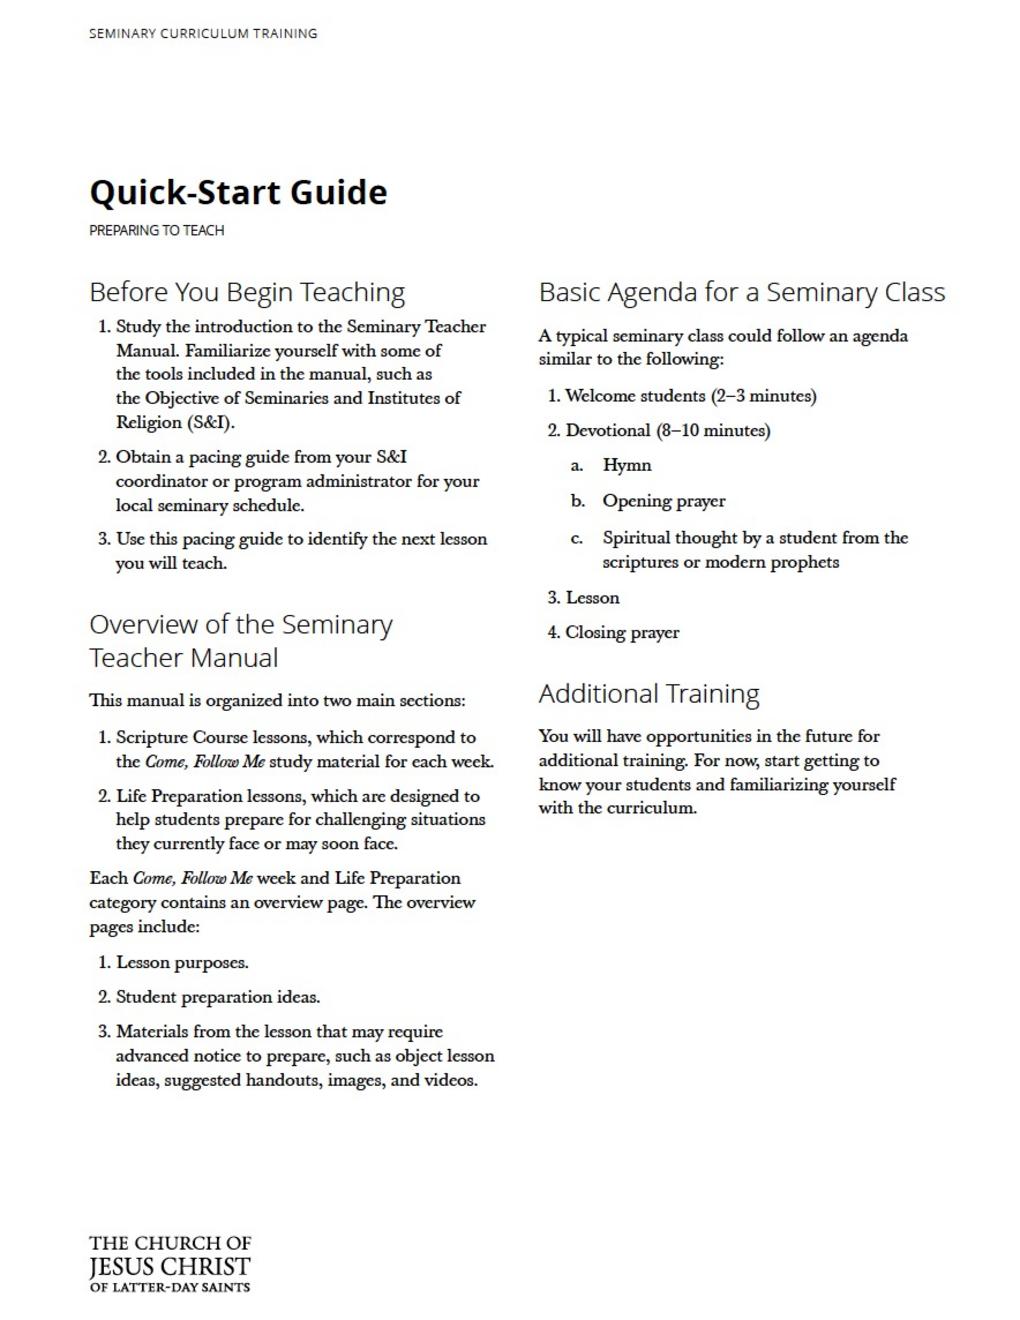 Quick Start Guide (2025)